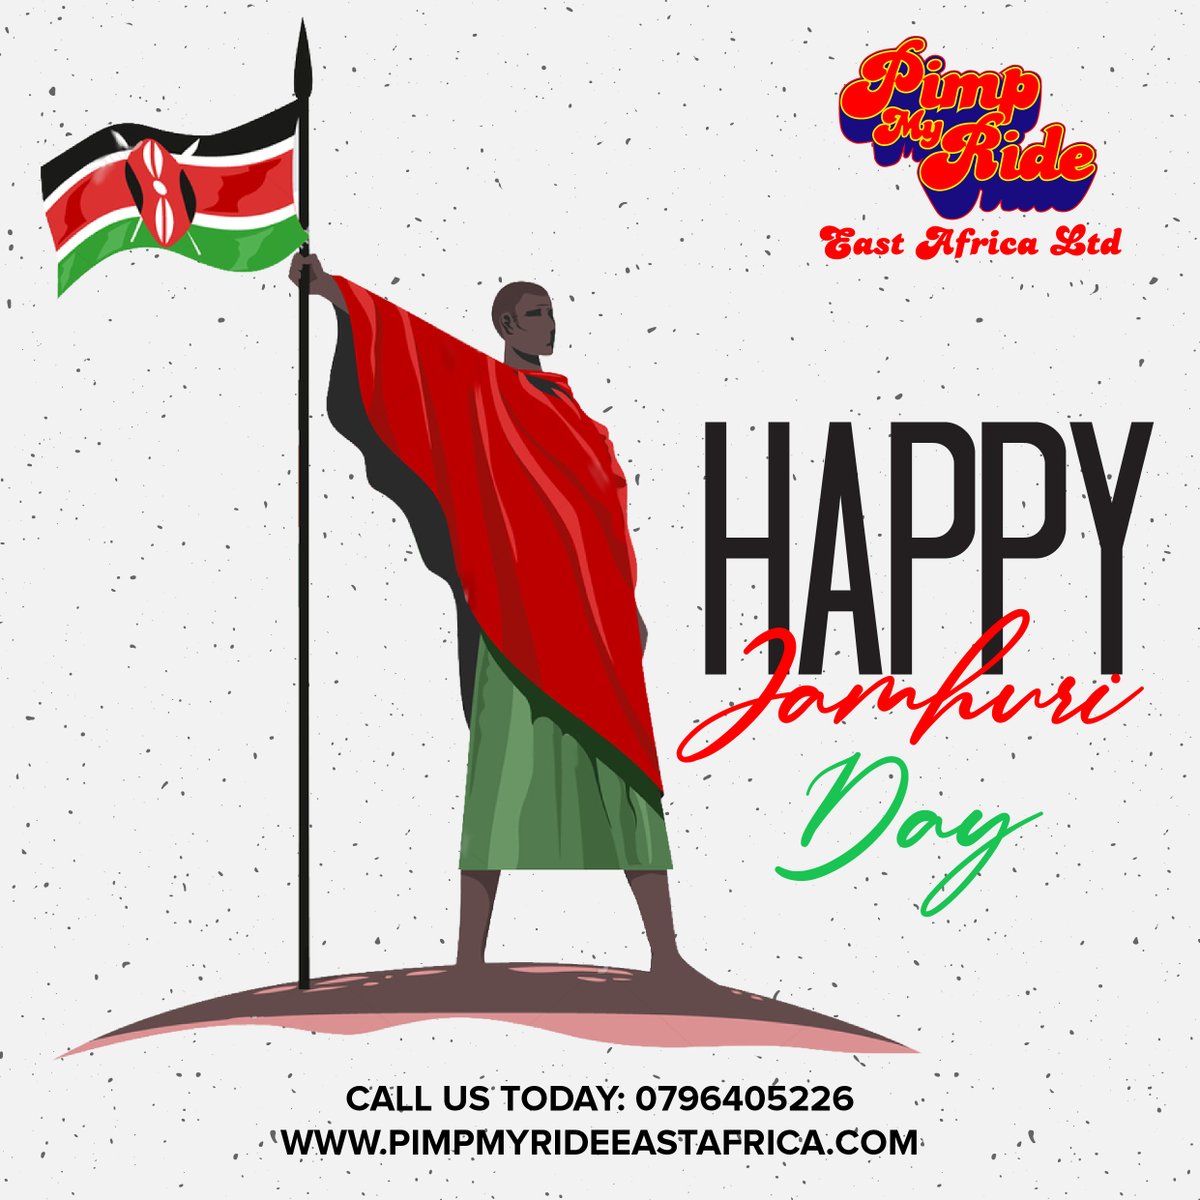 Wishing you a Safe and Happy #JamhuriDay #pimpmyride #eastafrica